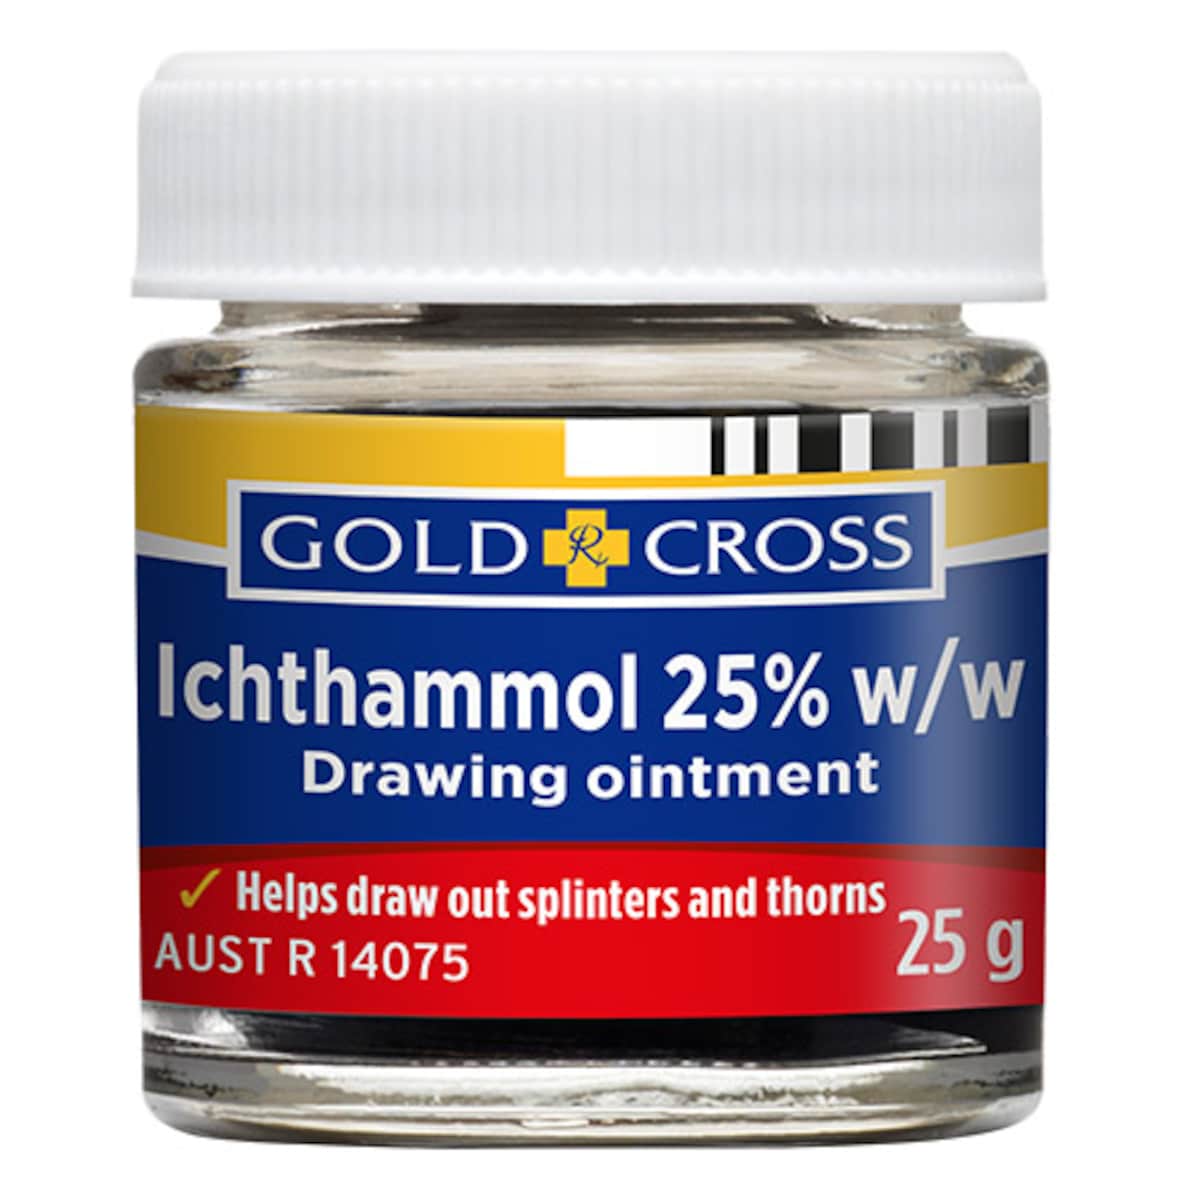 Gold Cross Ichthammol Drawing Ointment 25g